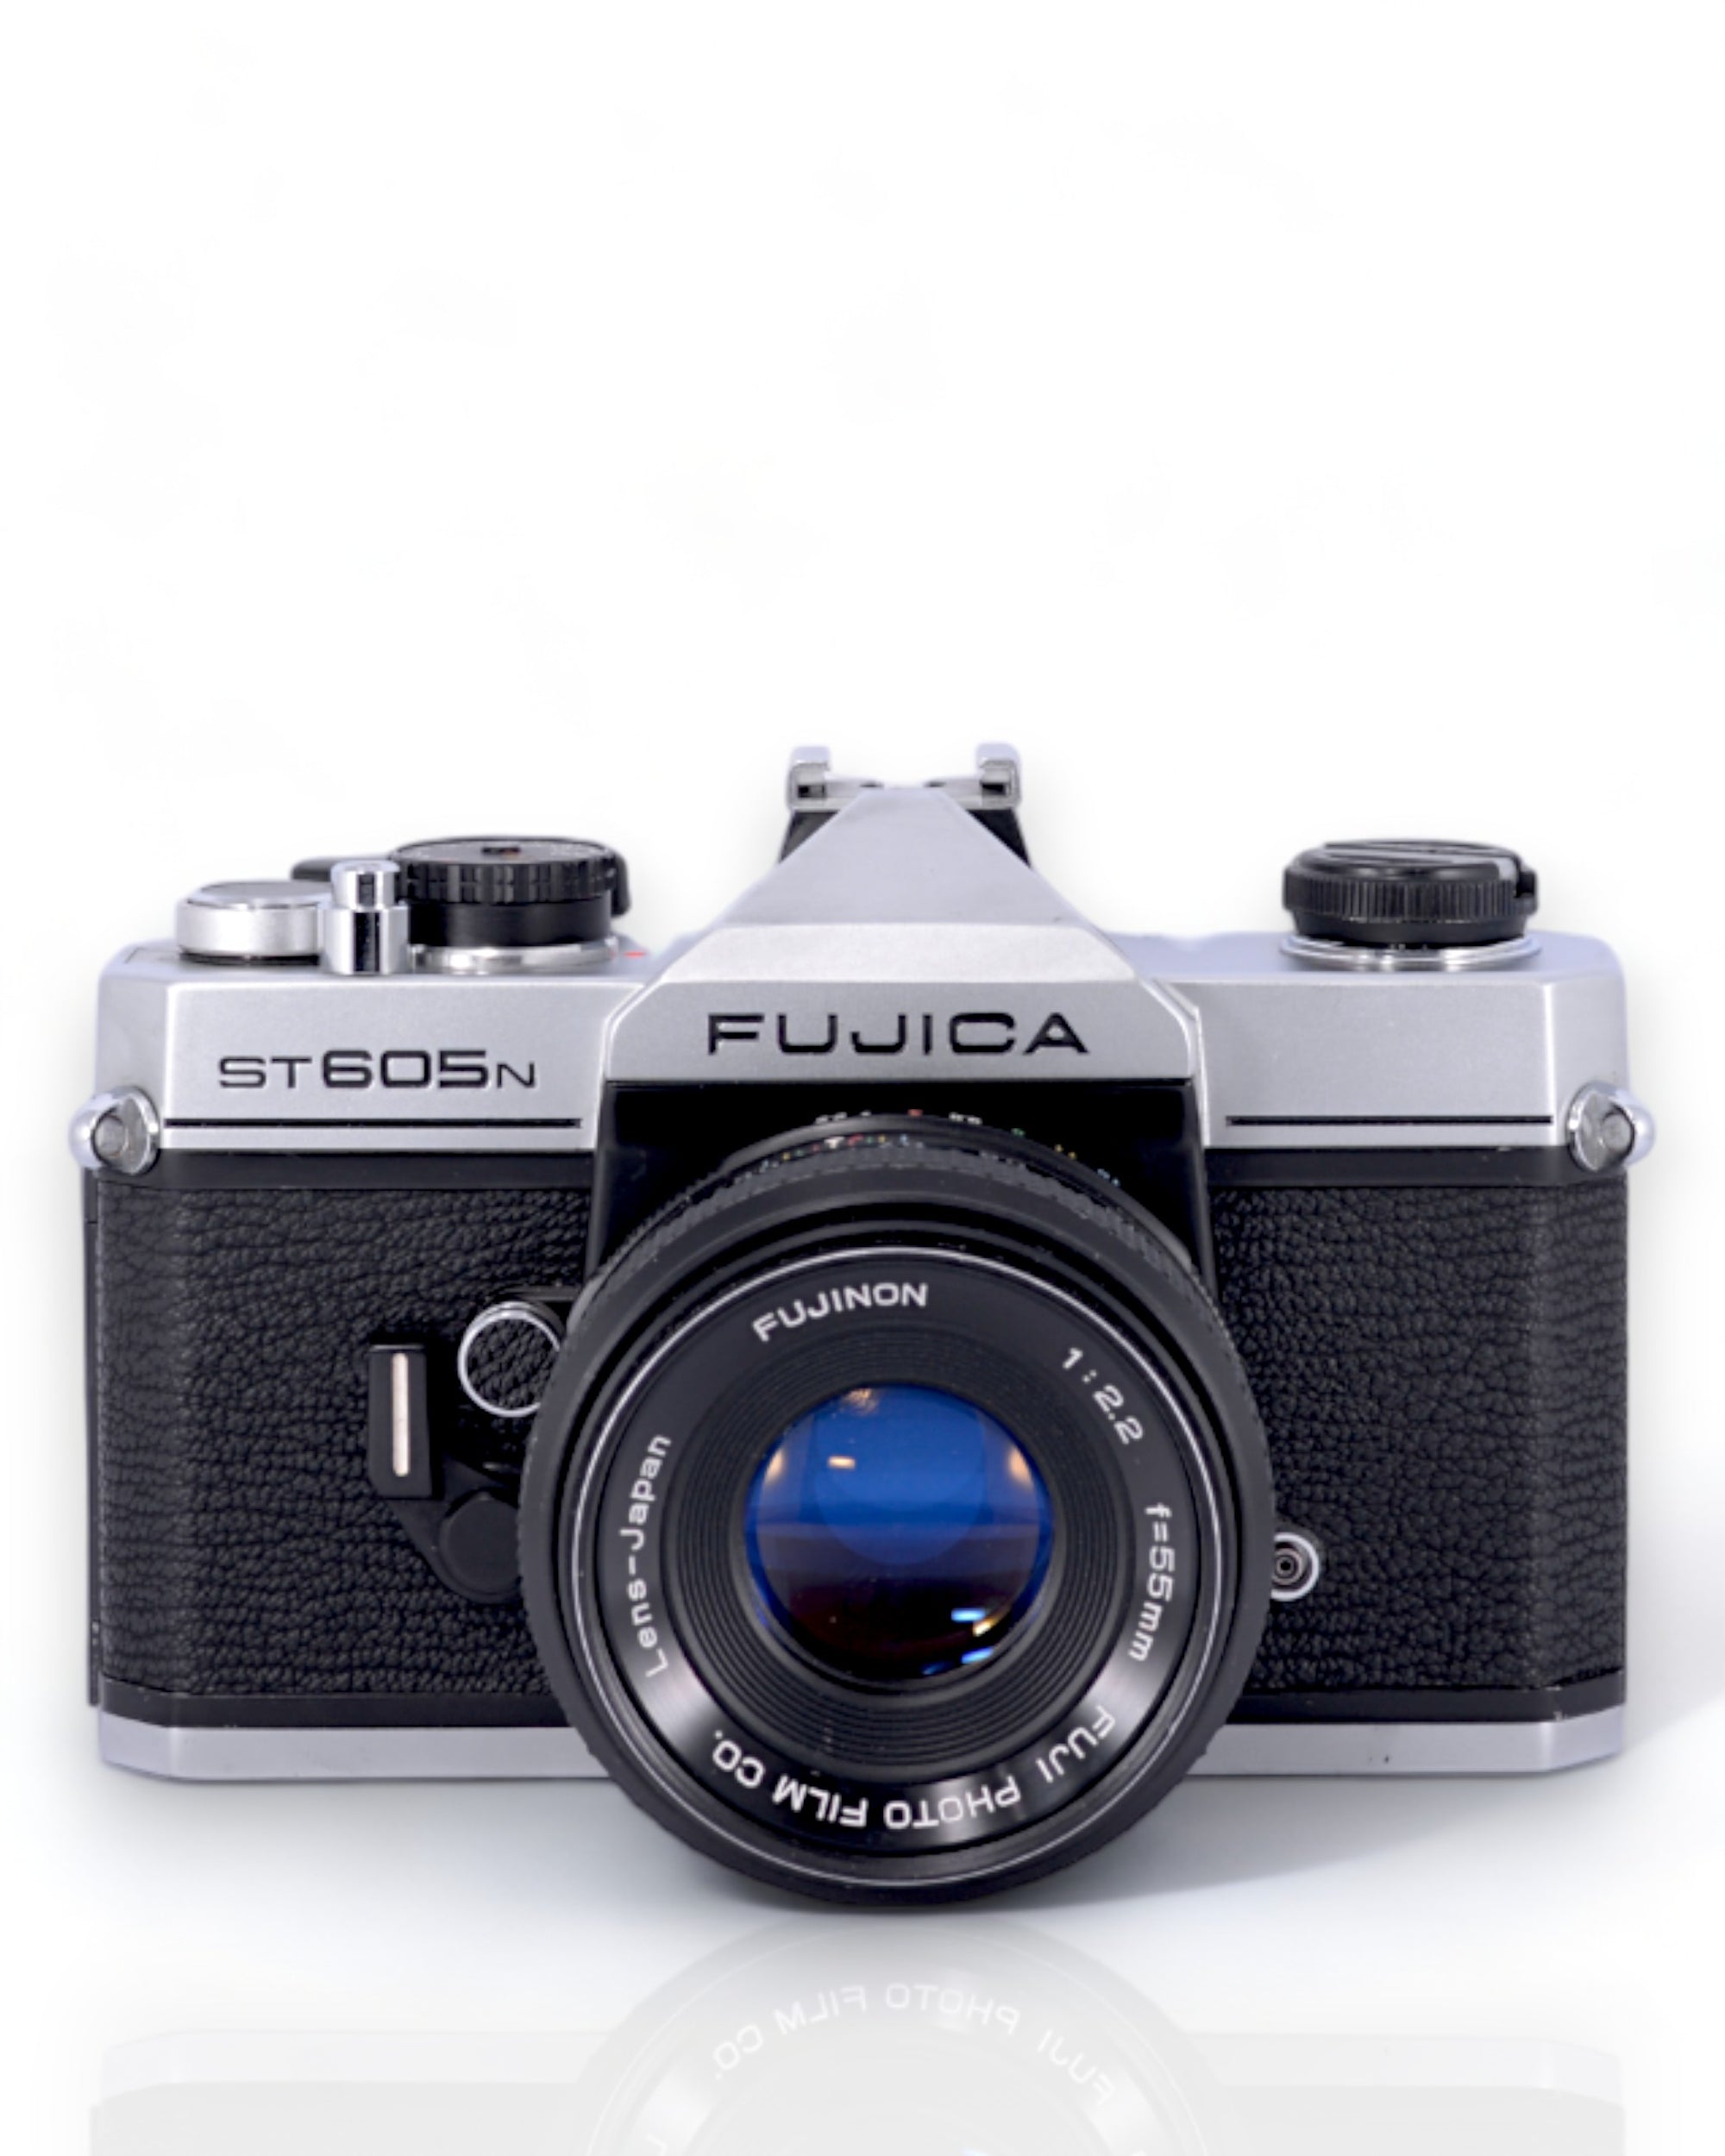 Fujica ST605N 35mm SLR film camera with 55mm f2.2 lens